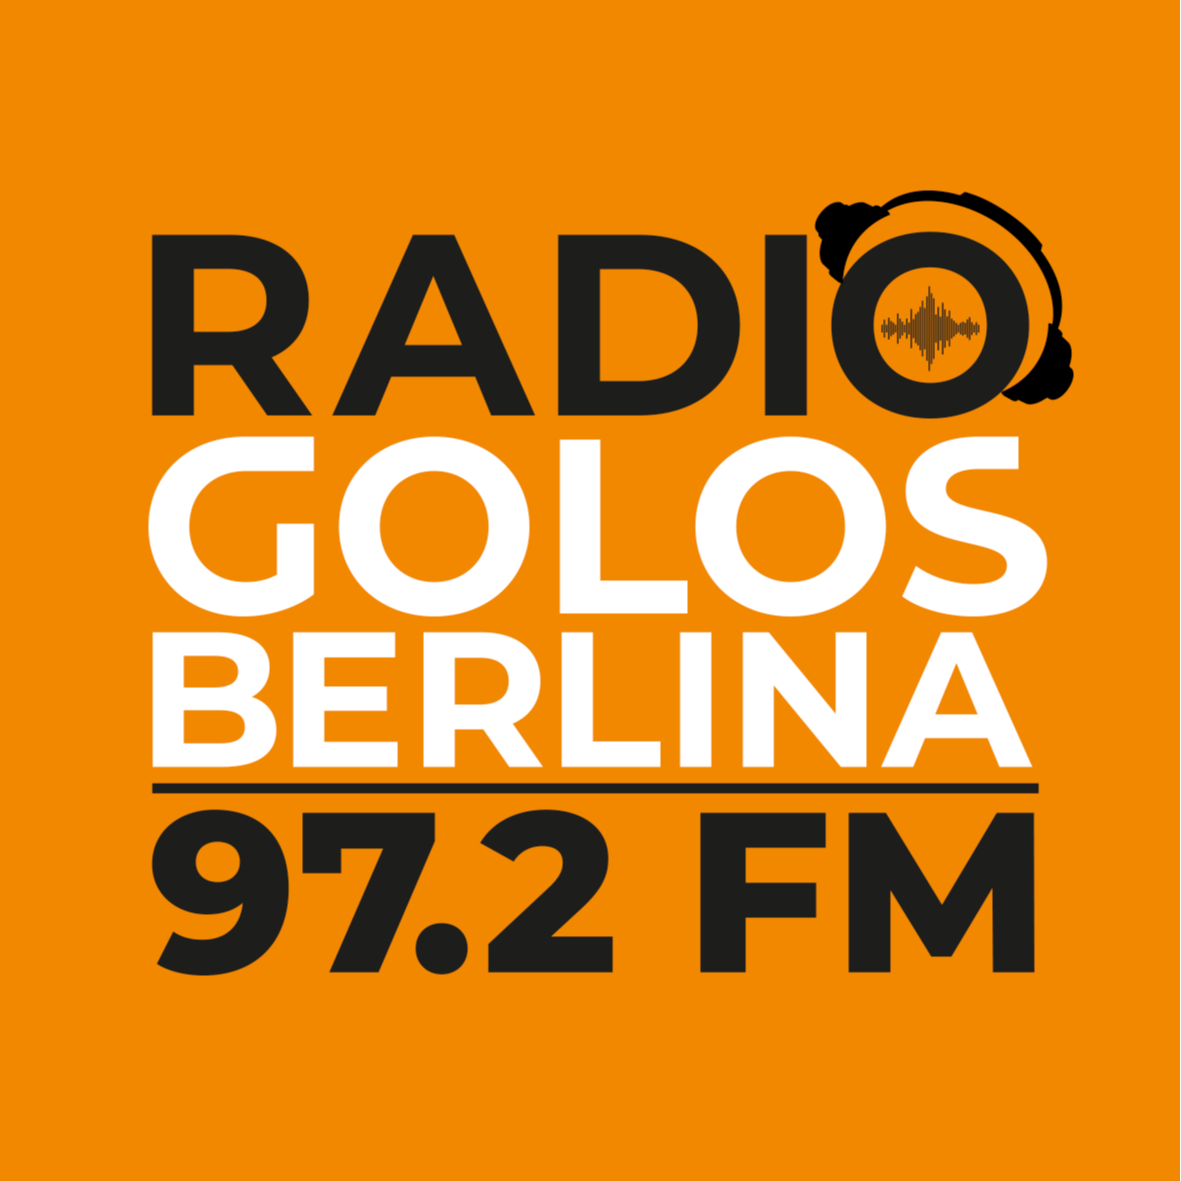 Radio Golos Berlin 97.2 FM